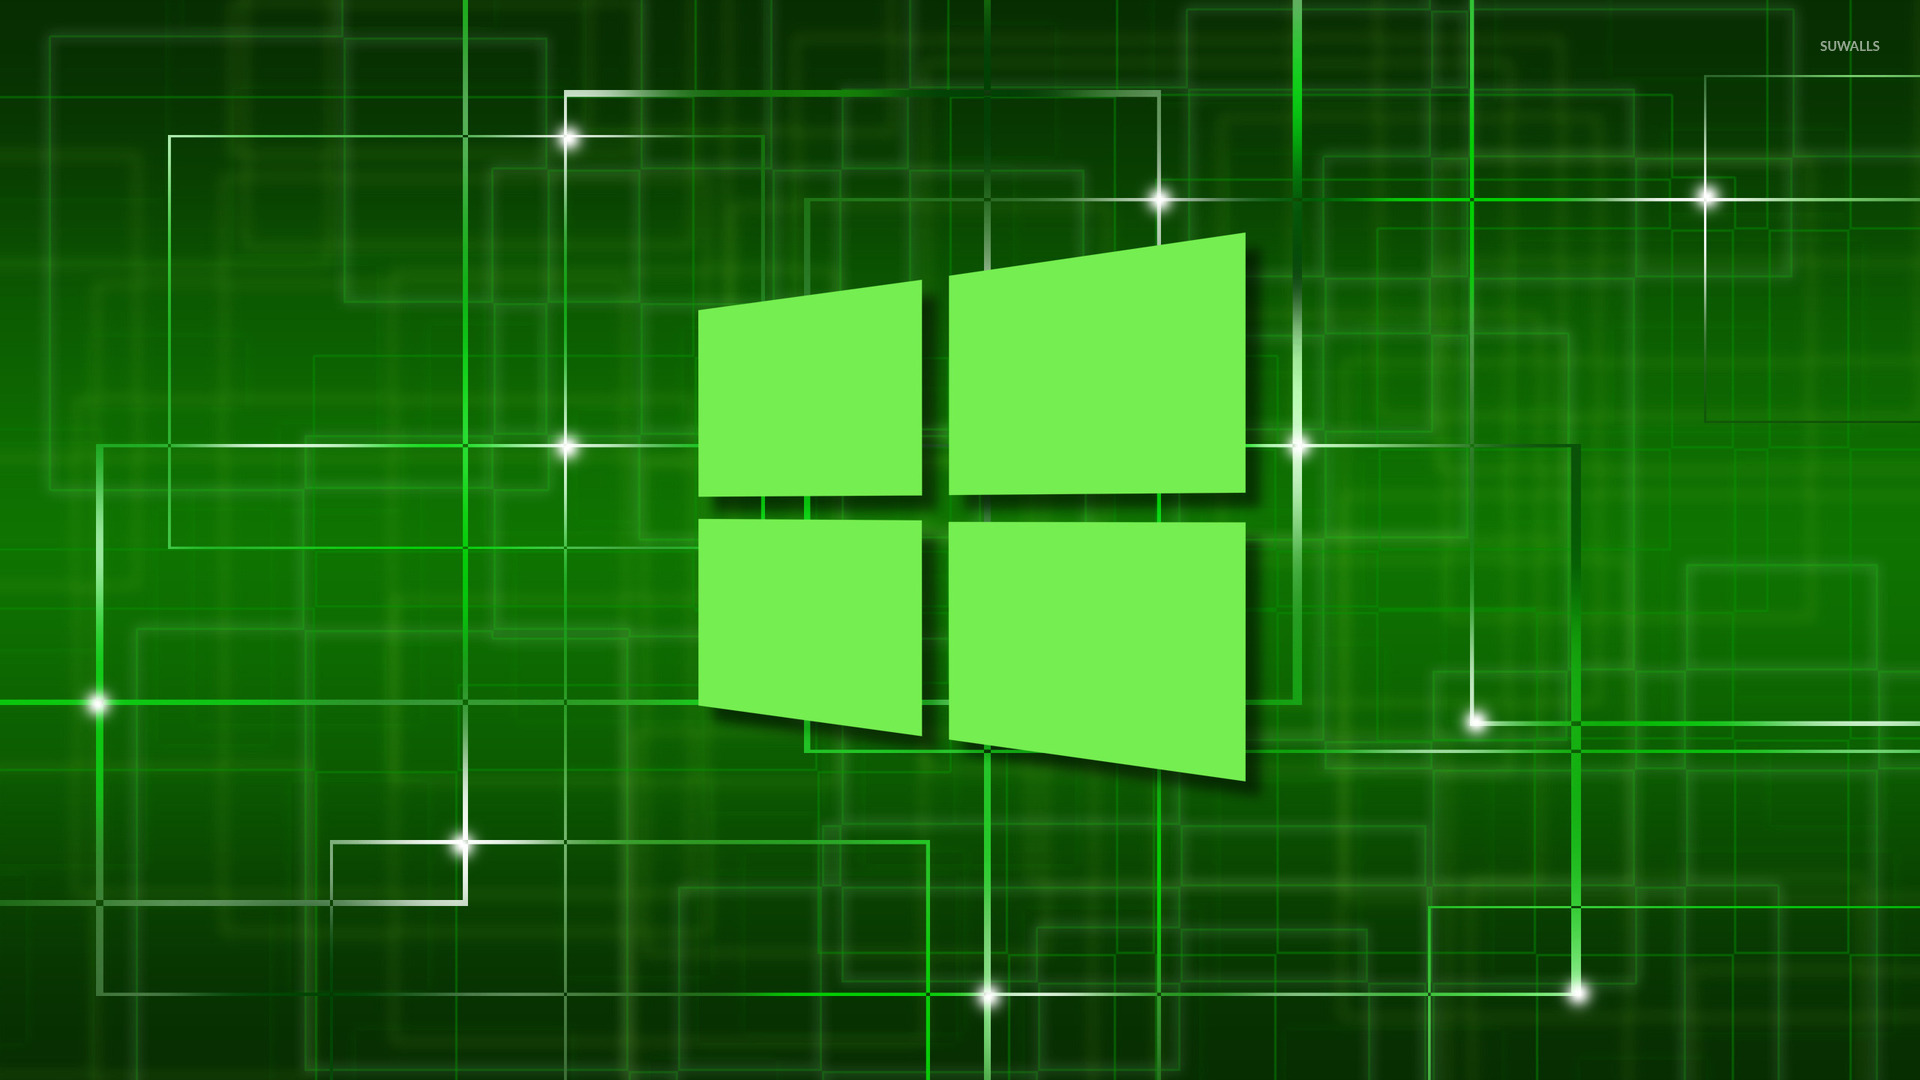  46 Windows  10  Green  Wallpaper  on WallpaperSafari